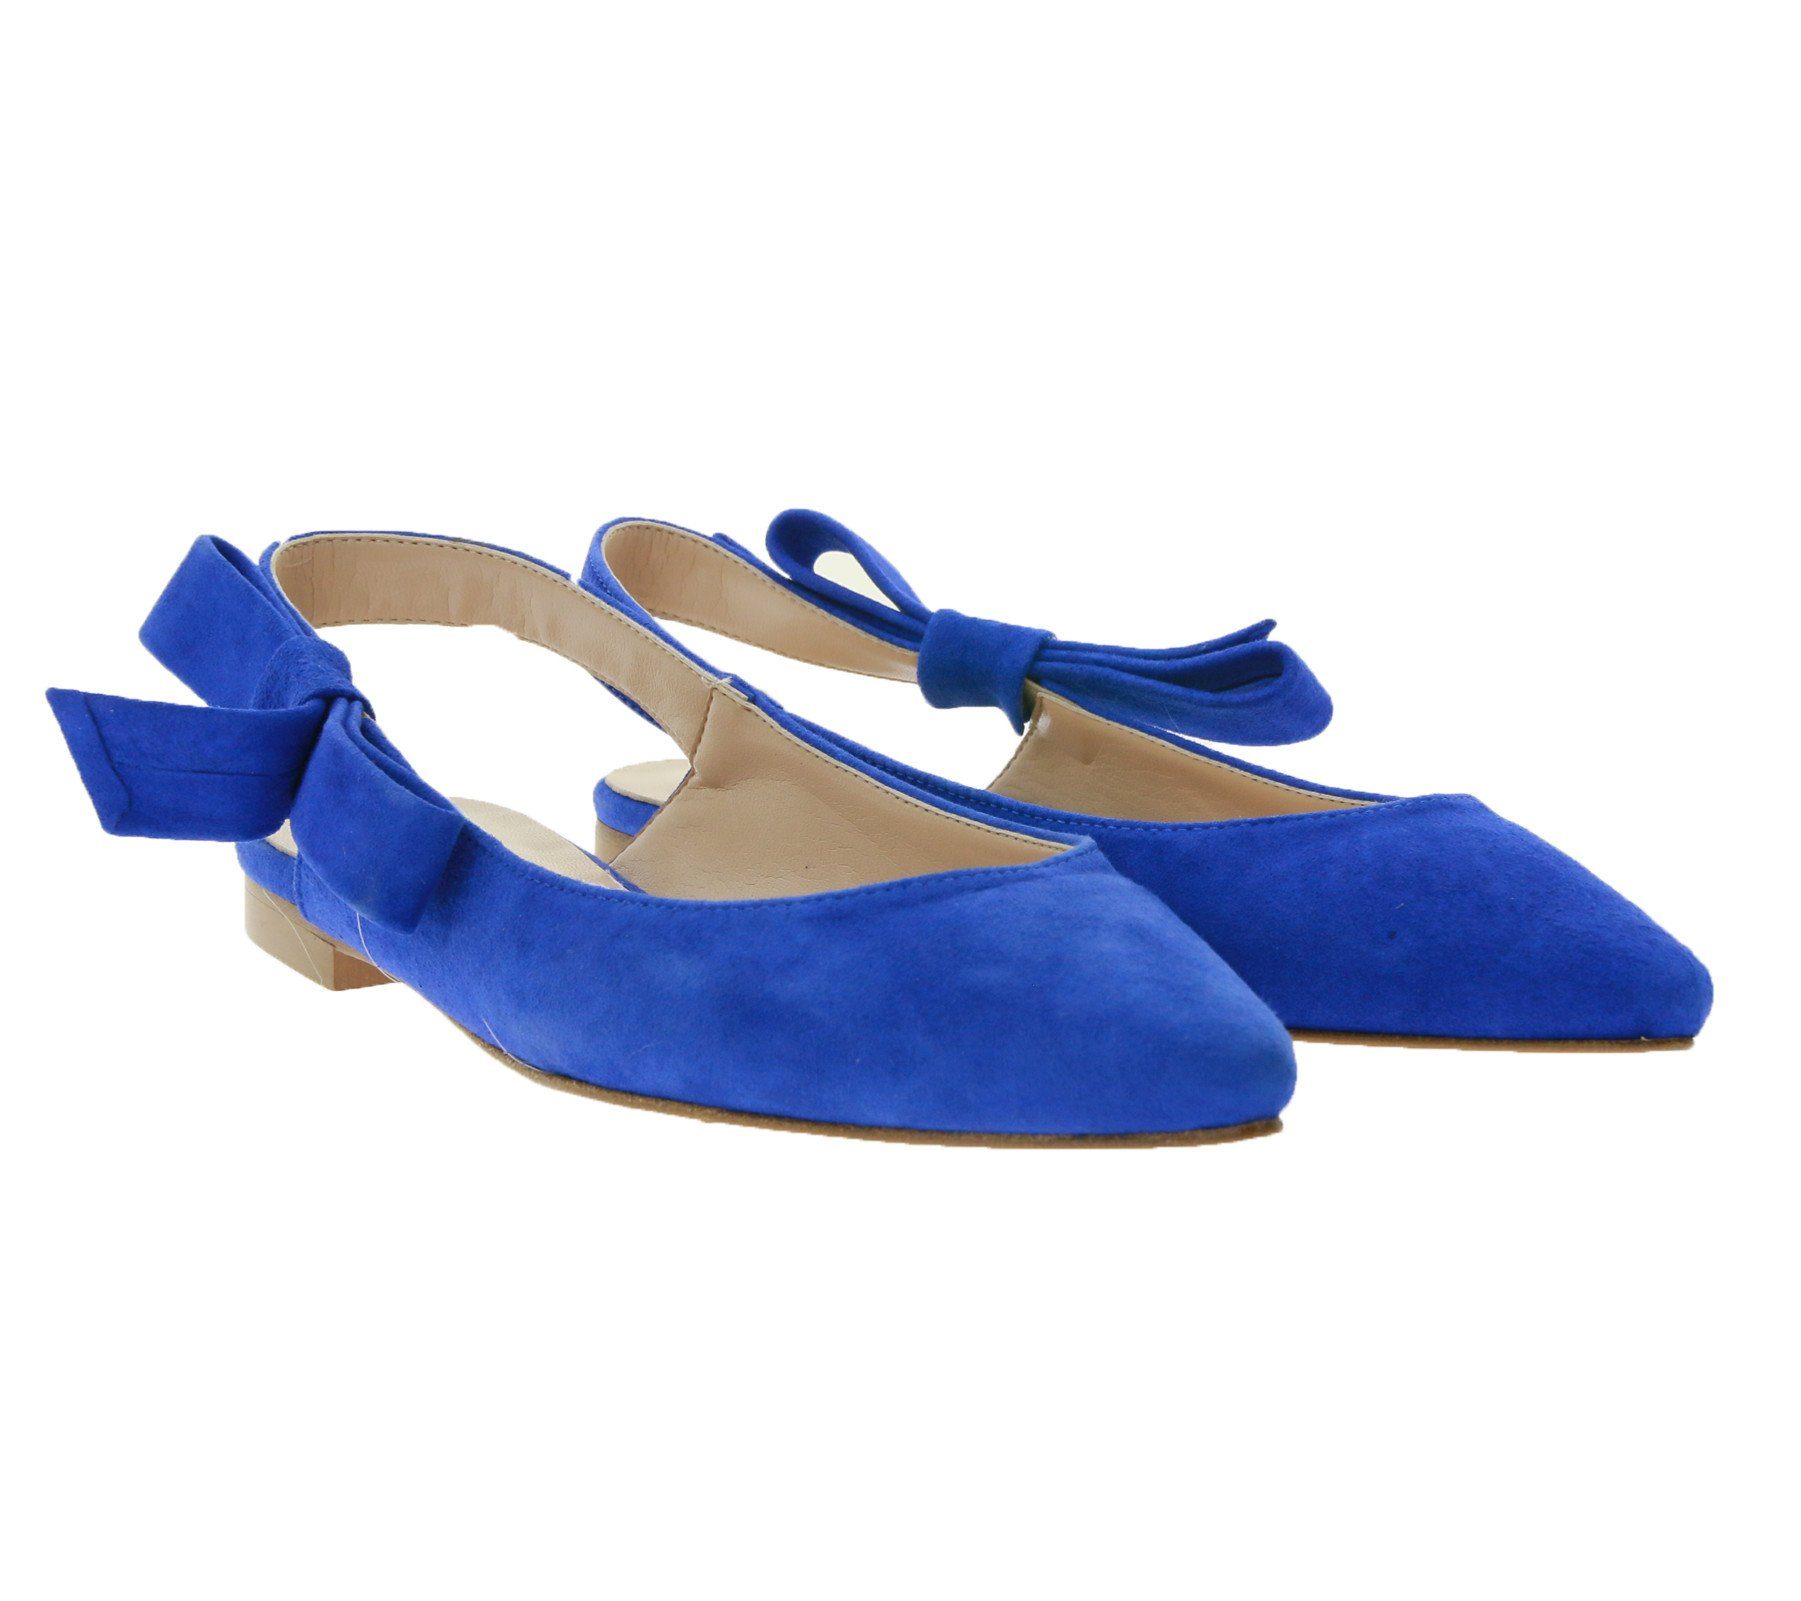 BiancaDi »Bianca Di Echtleder-Slipper bequeme Damen Sling-Pumps Made in  Italy Absatz-Schuhe Blau« Slingpumps online kaufen | OTTO